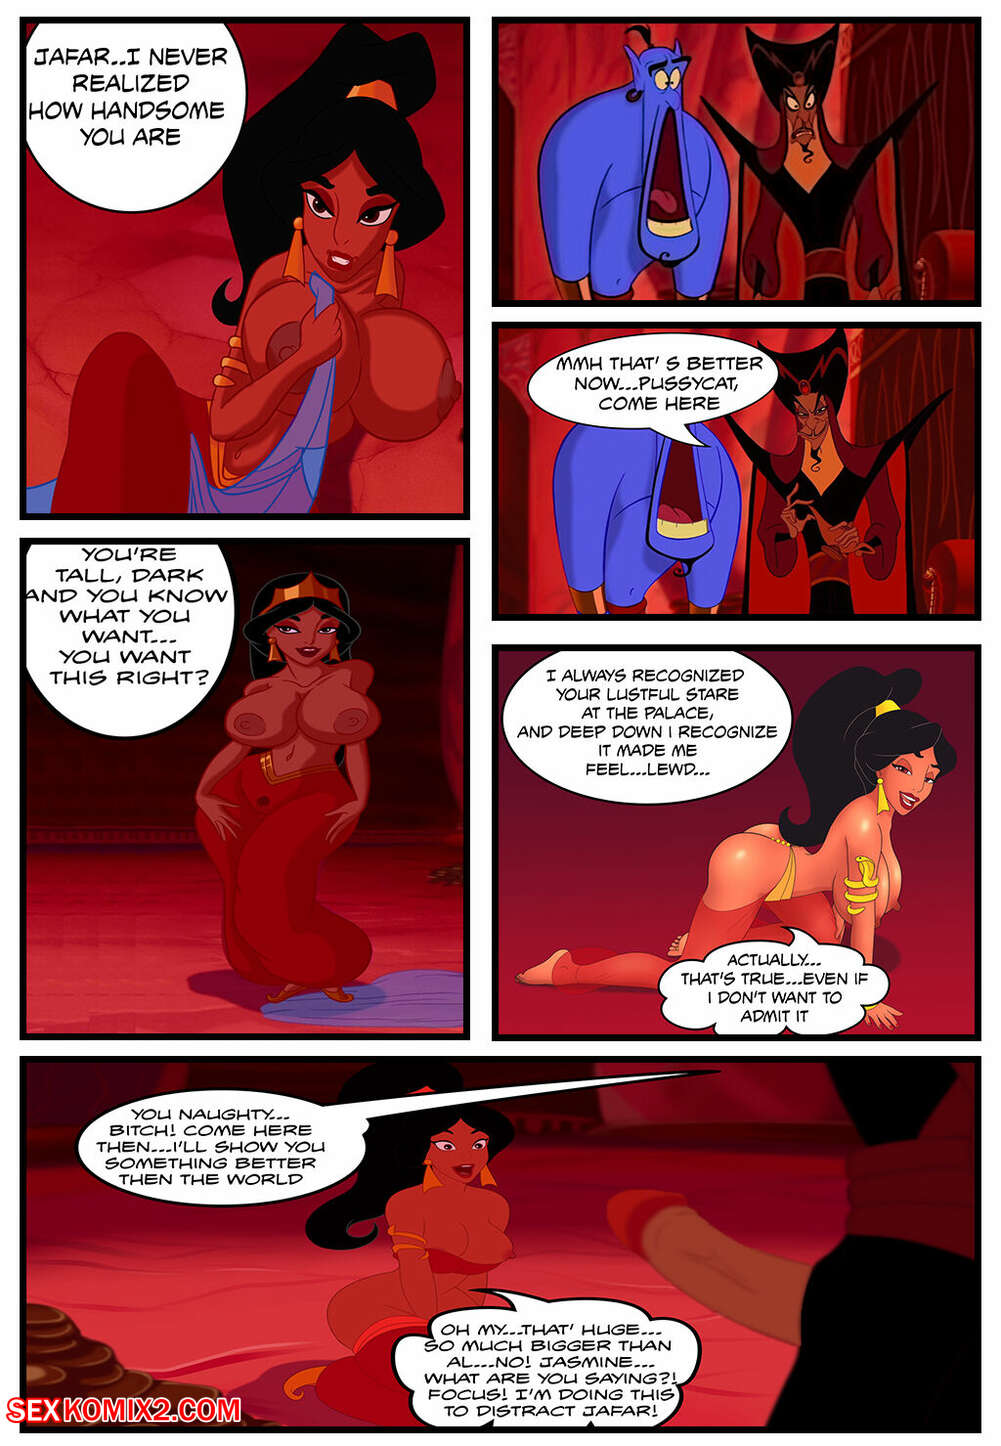 Aladdin fat porn comic